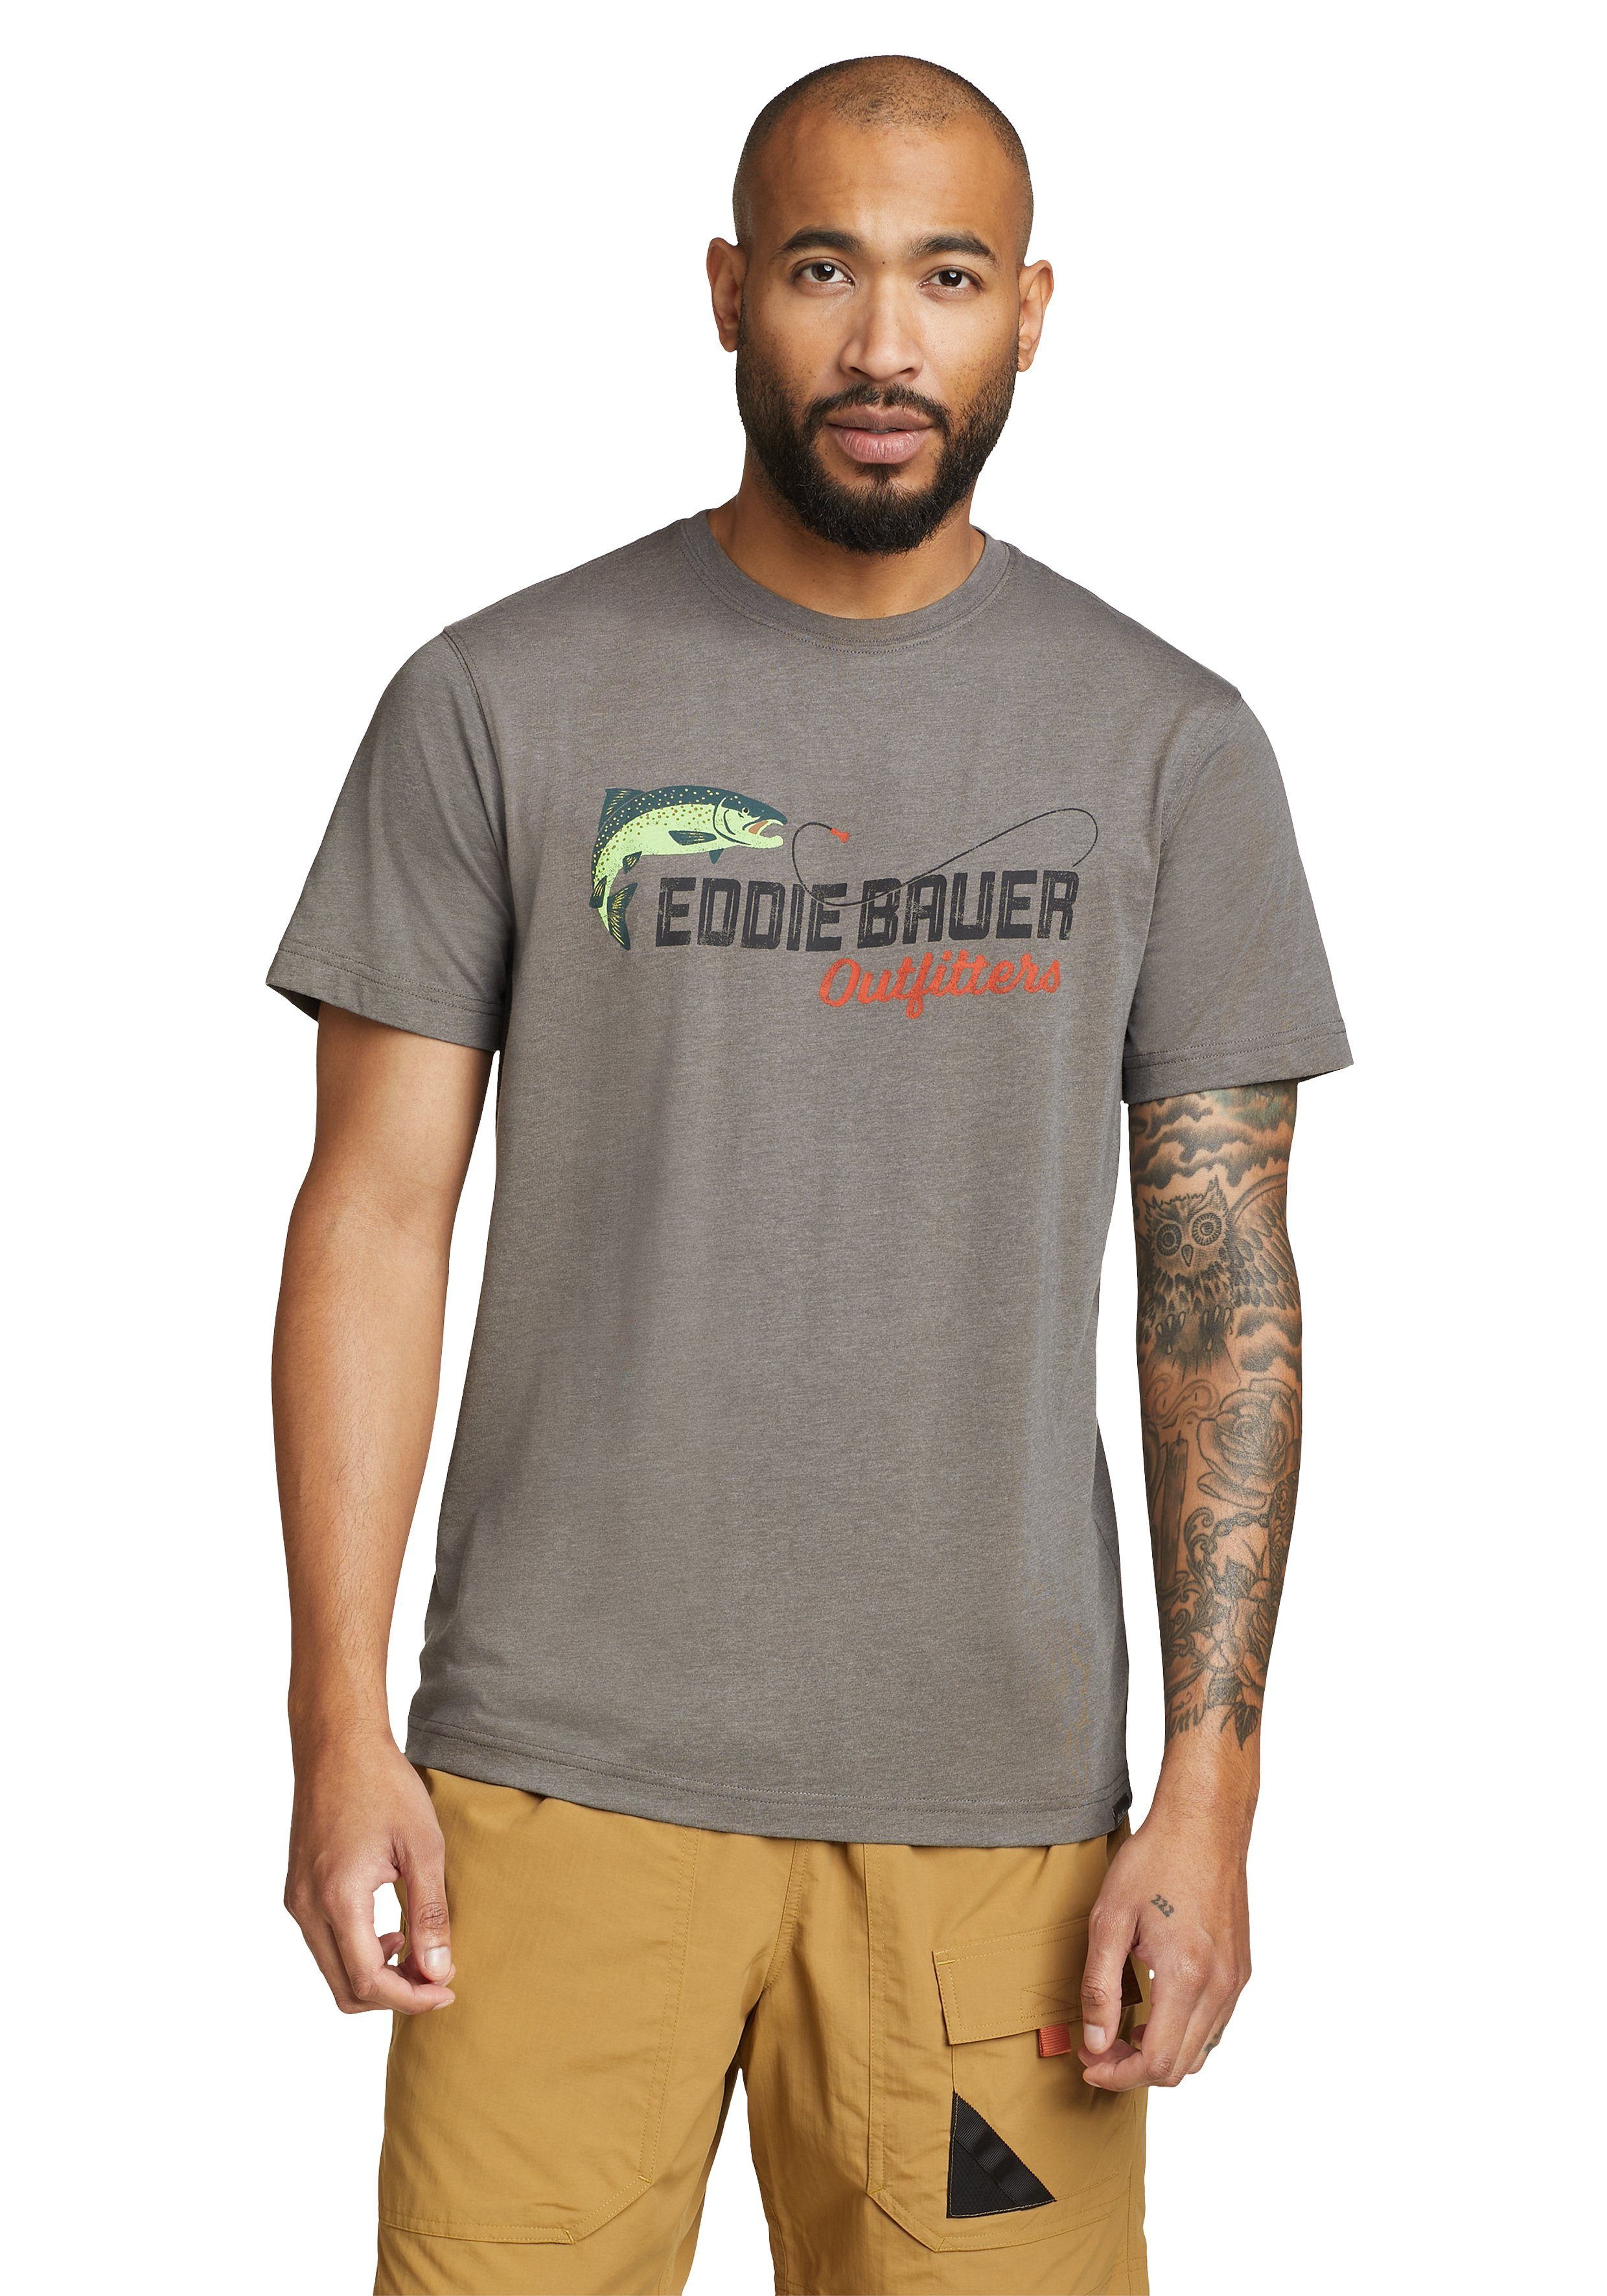 Eddie Bauer T-Shirt Graphic T-Shirt Retro Fish